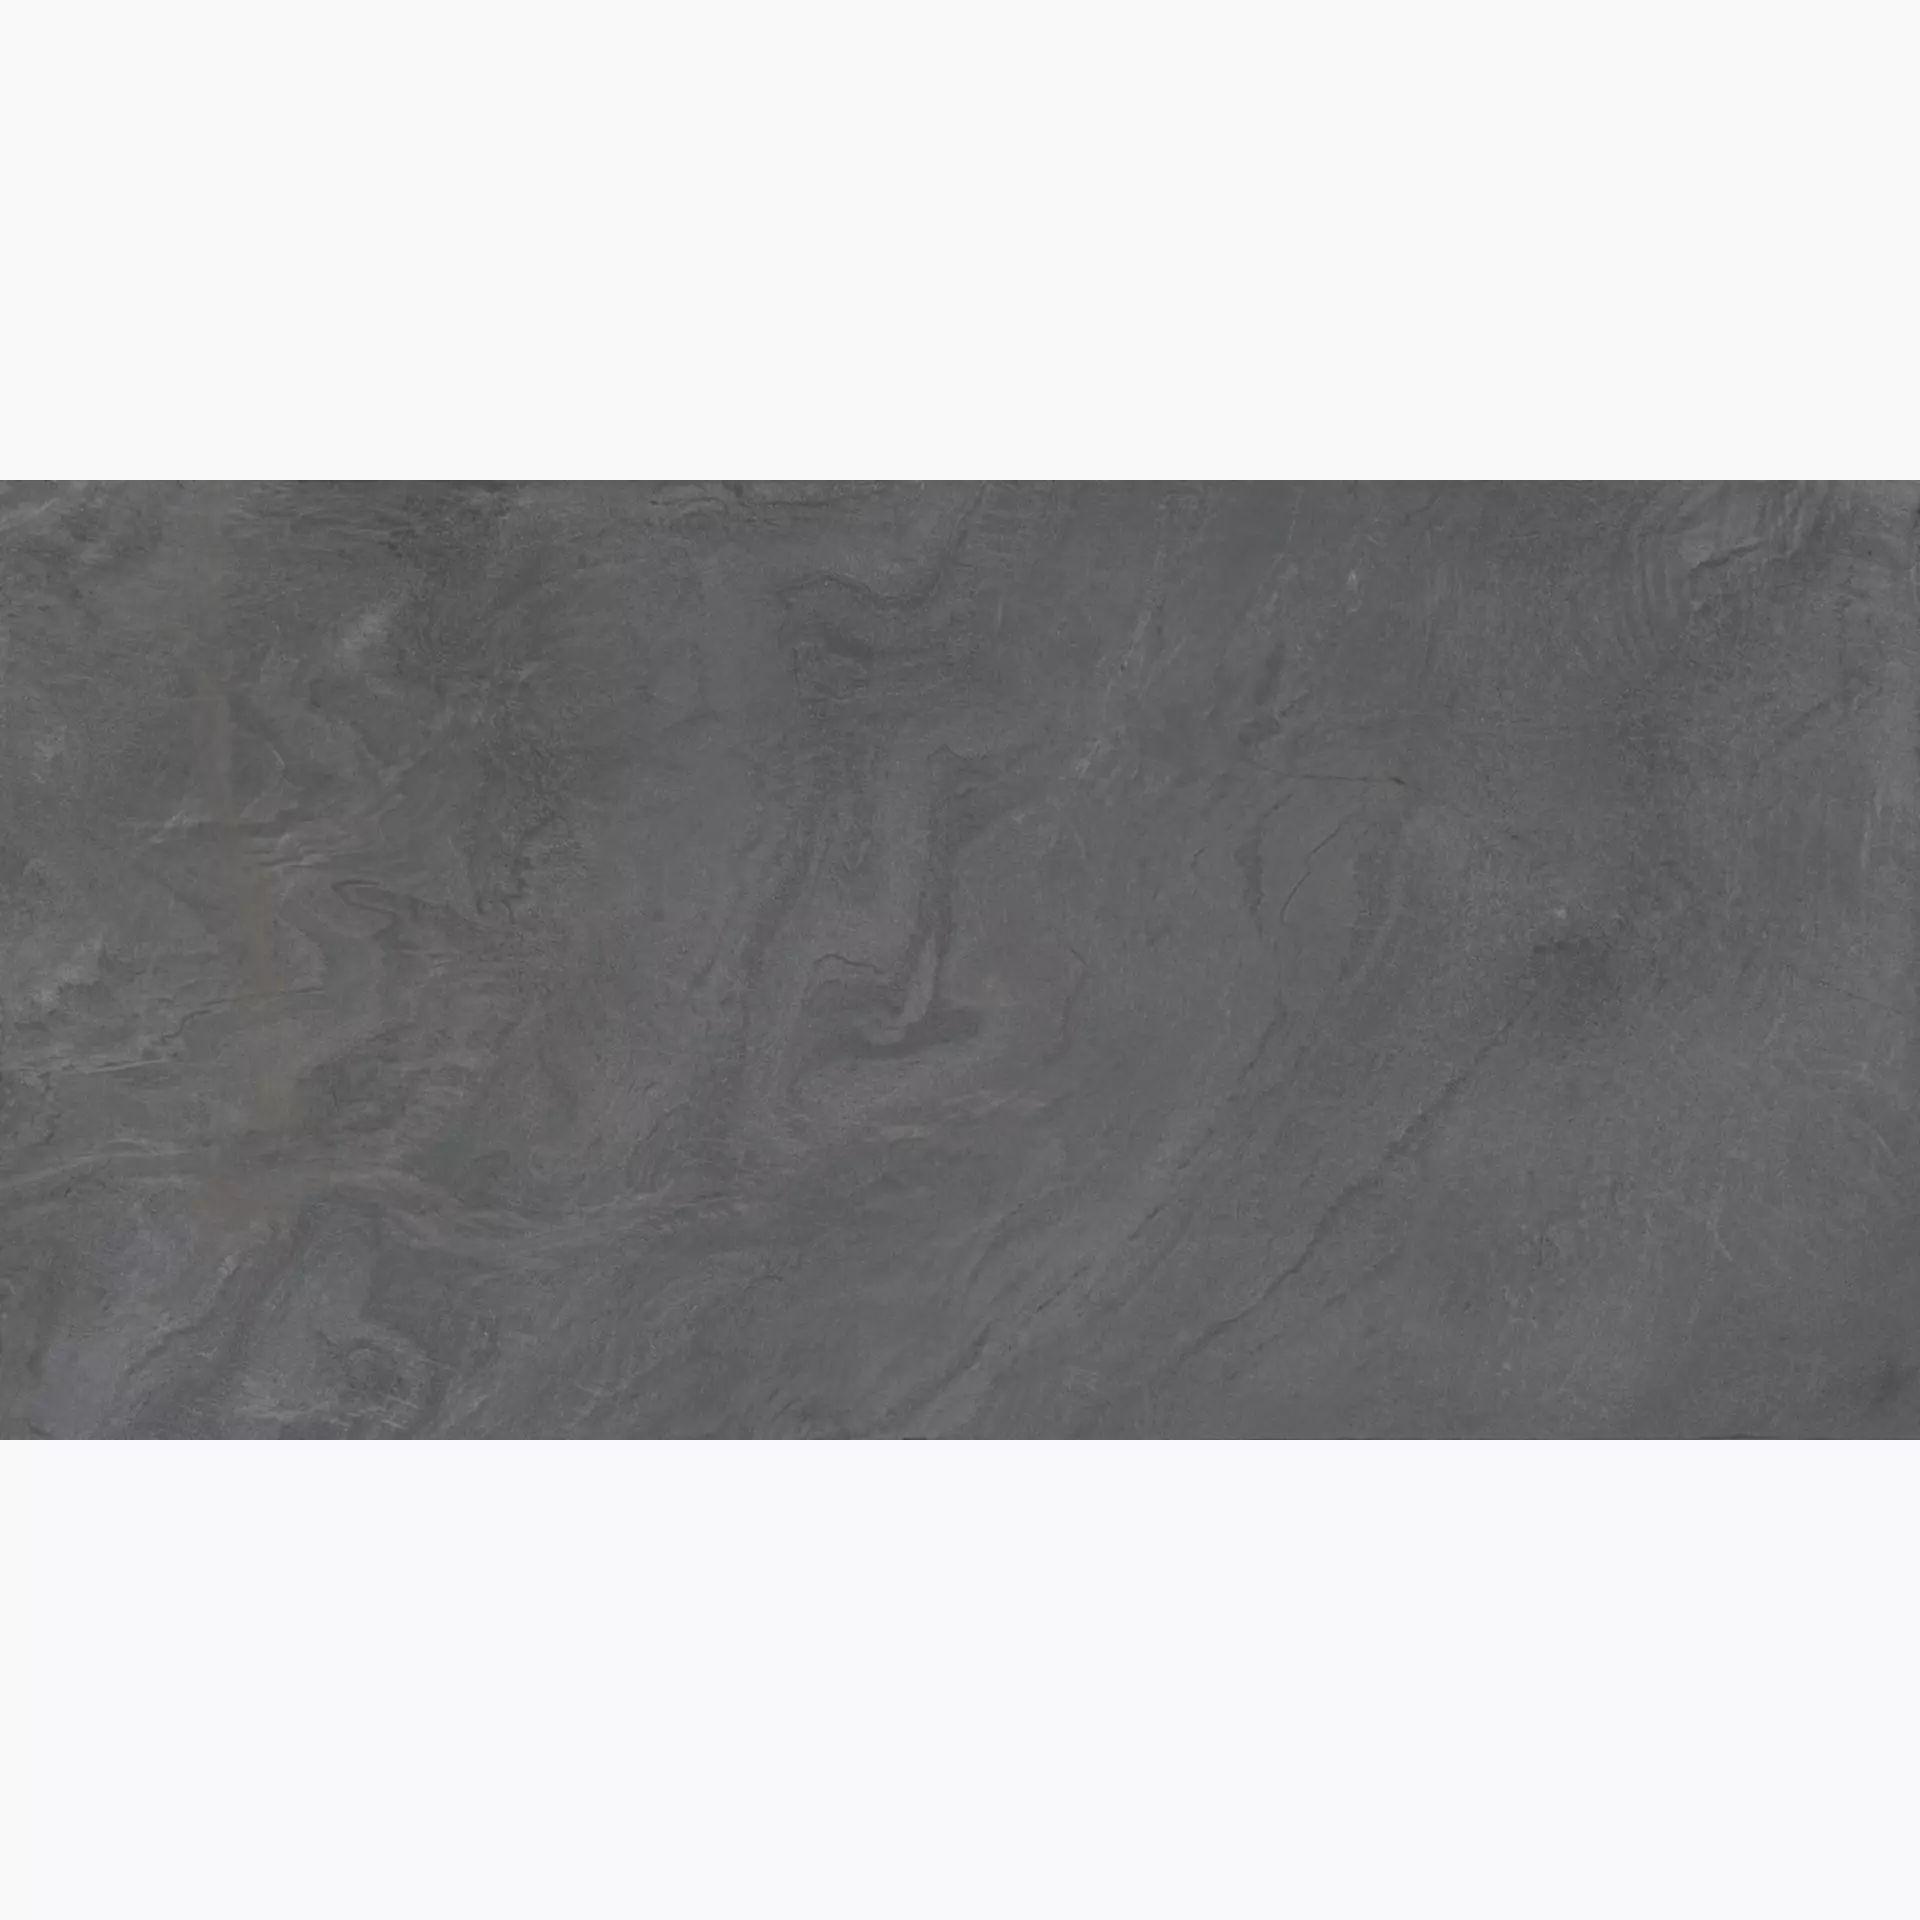 Diesel Liquid Stone Black Naturale – Matt 892748 60x120cm rectified 9mm